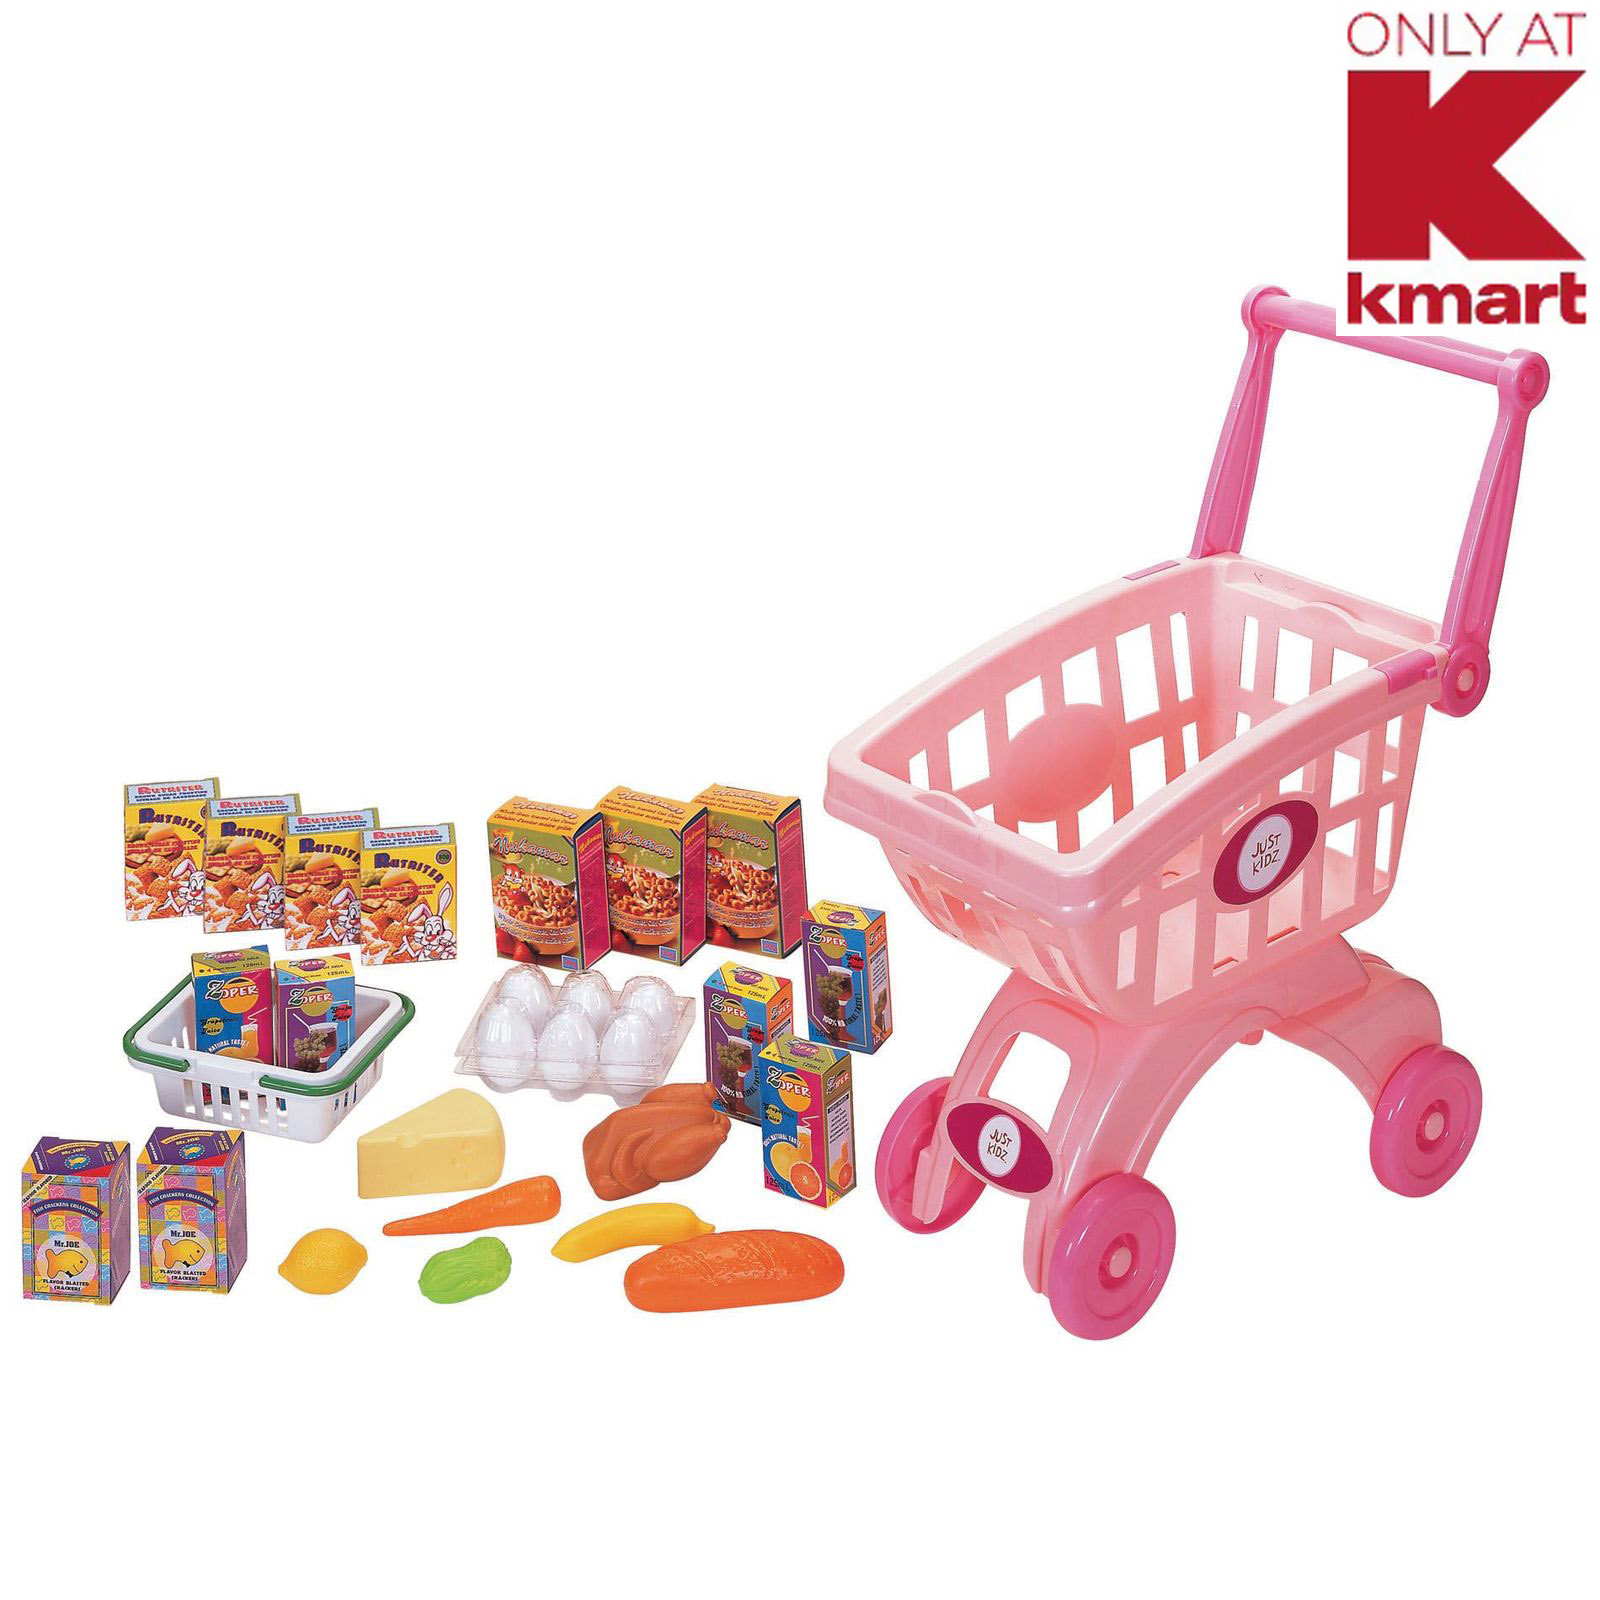 Just Kidz Shopping Cart Play Set   Pink   Toys & Games   Pretend Play